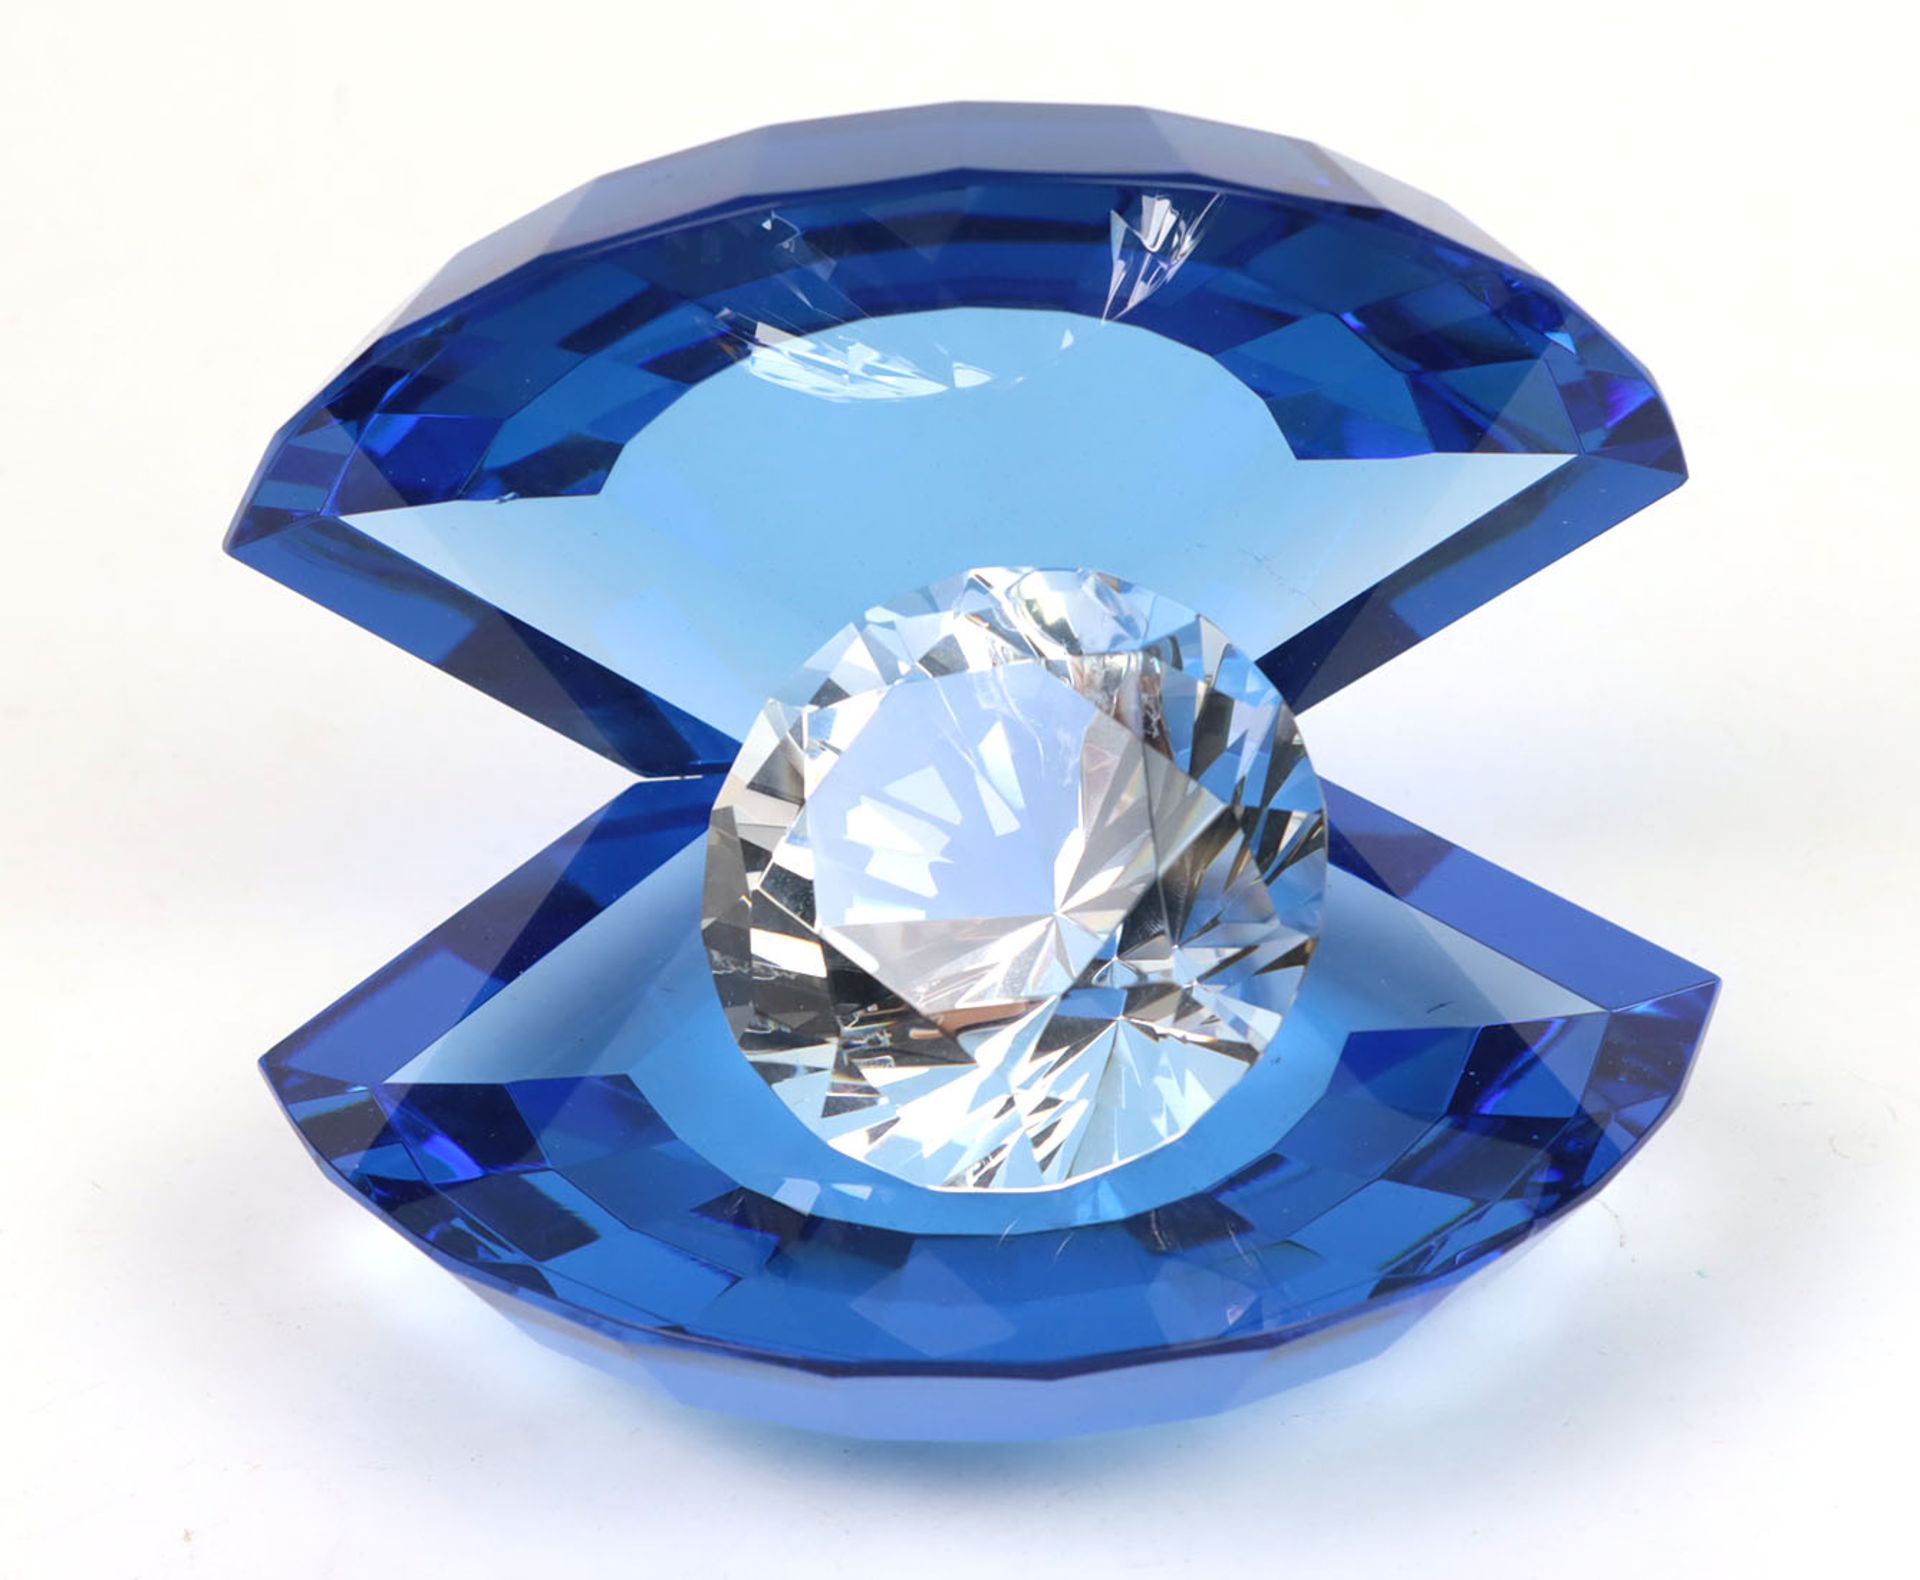 Kristallmuschel mit Kristall blaues transparentes, facettiertes Kristallglas in Form e